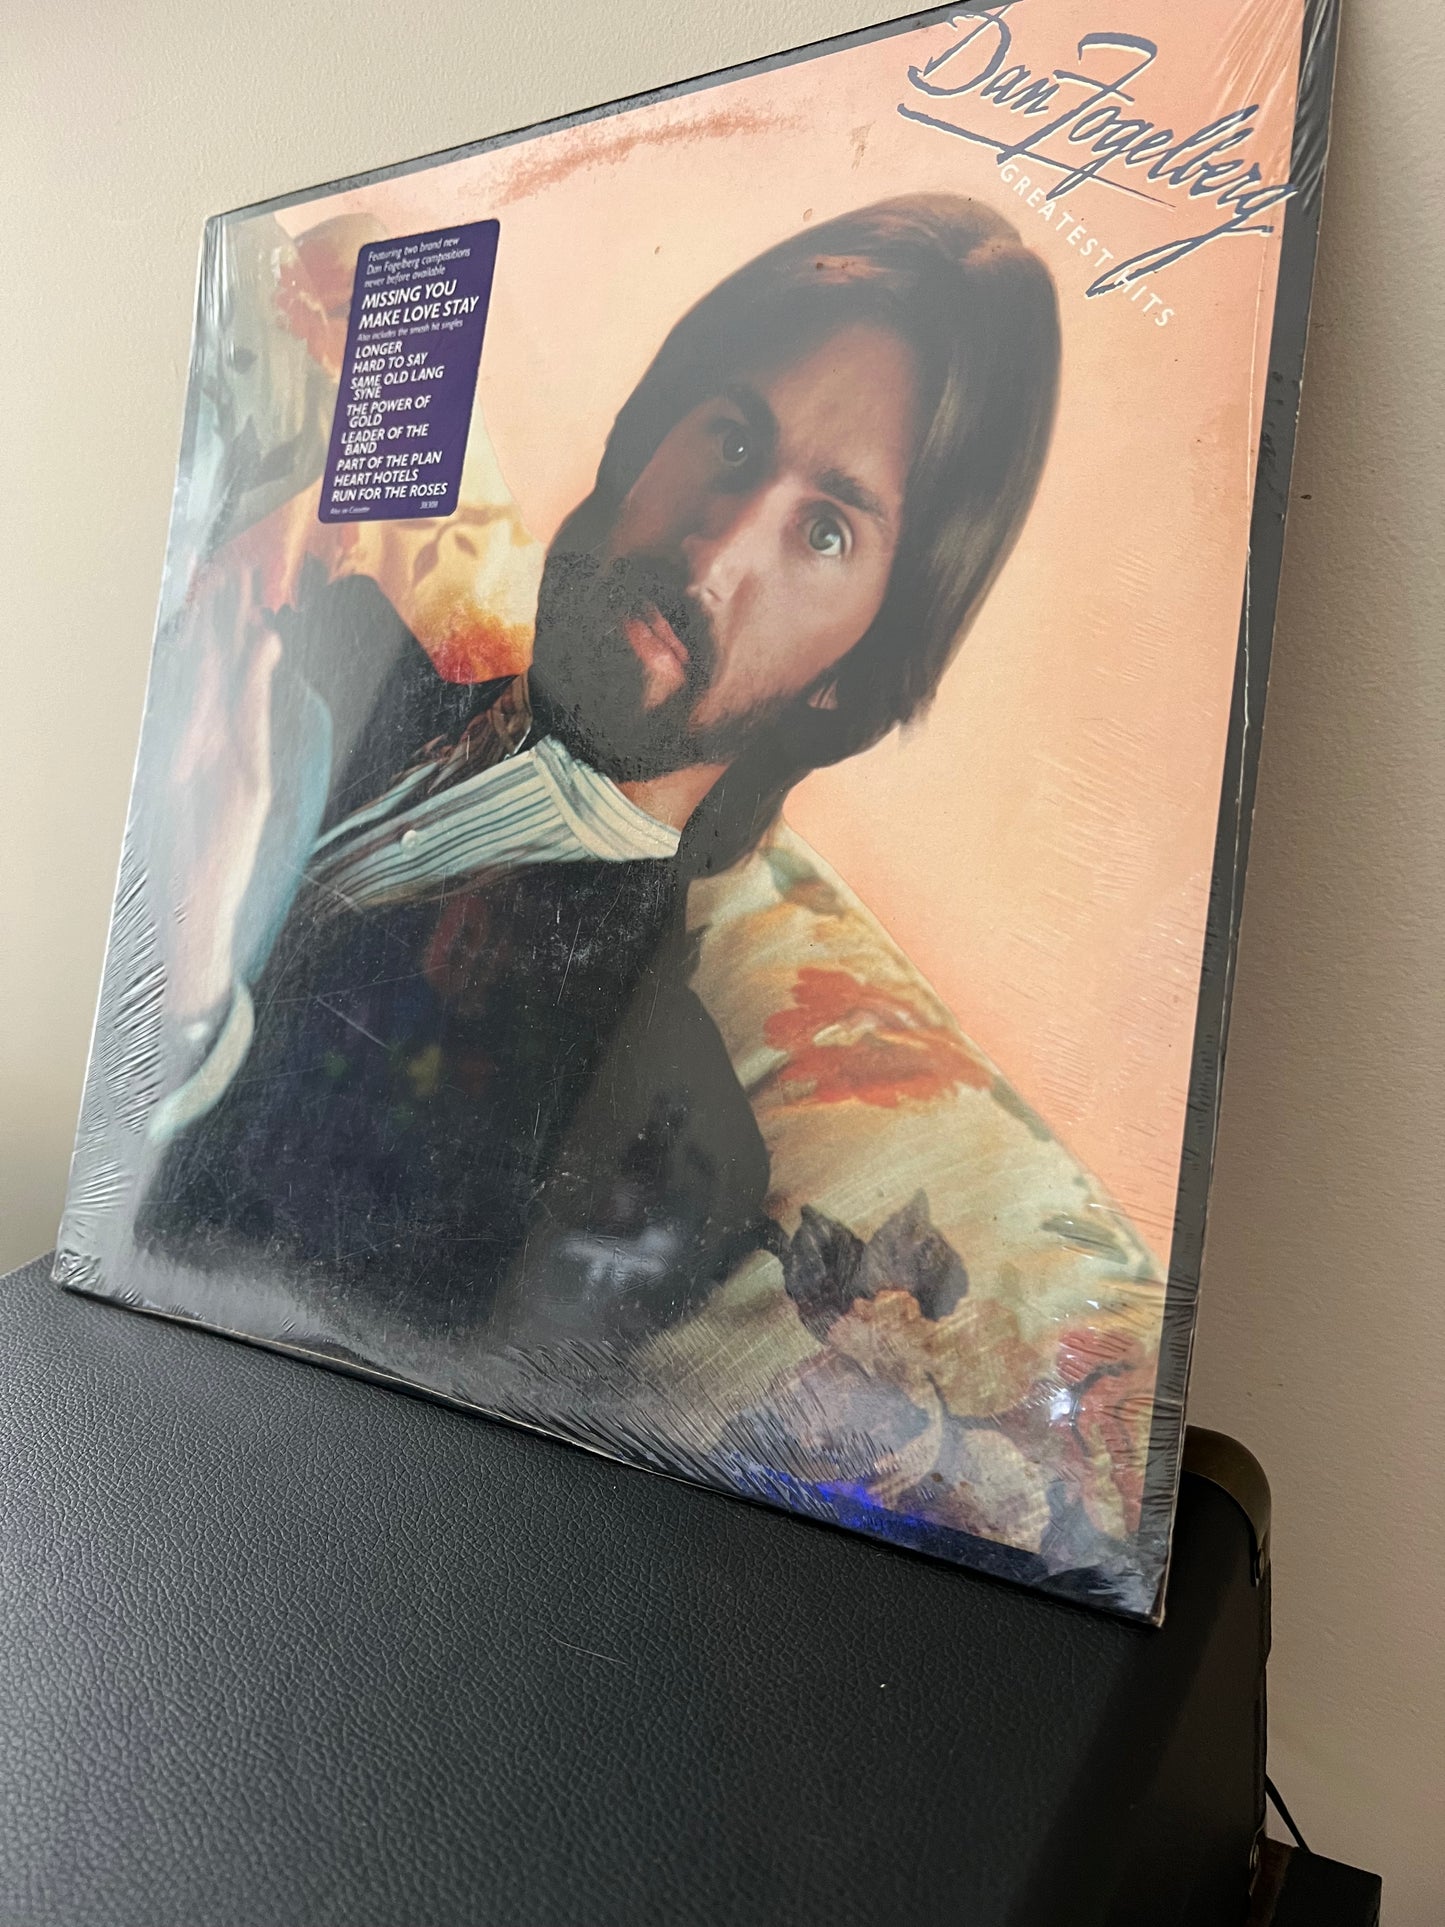 Dan Fogelberg Greatest Hits 1982 Vinyl Record LP Epic QE-38308 33RPM Brand New